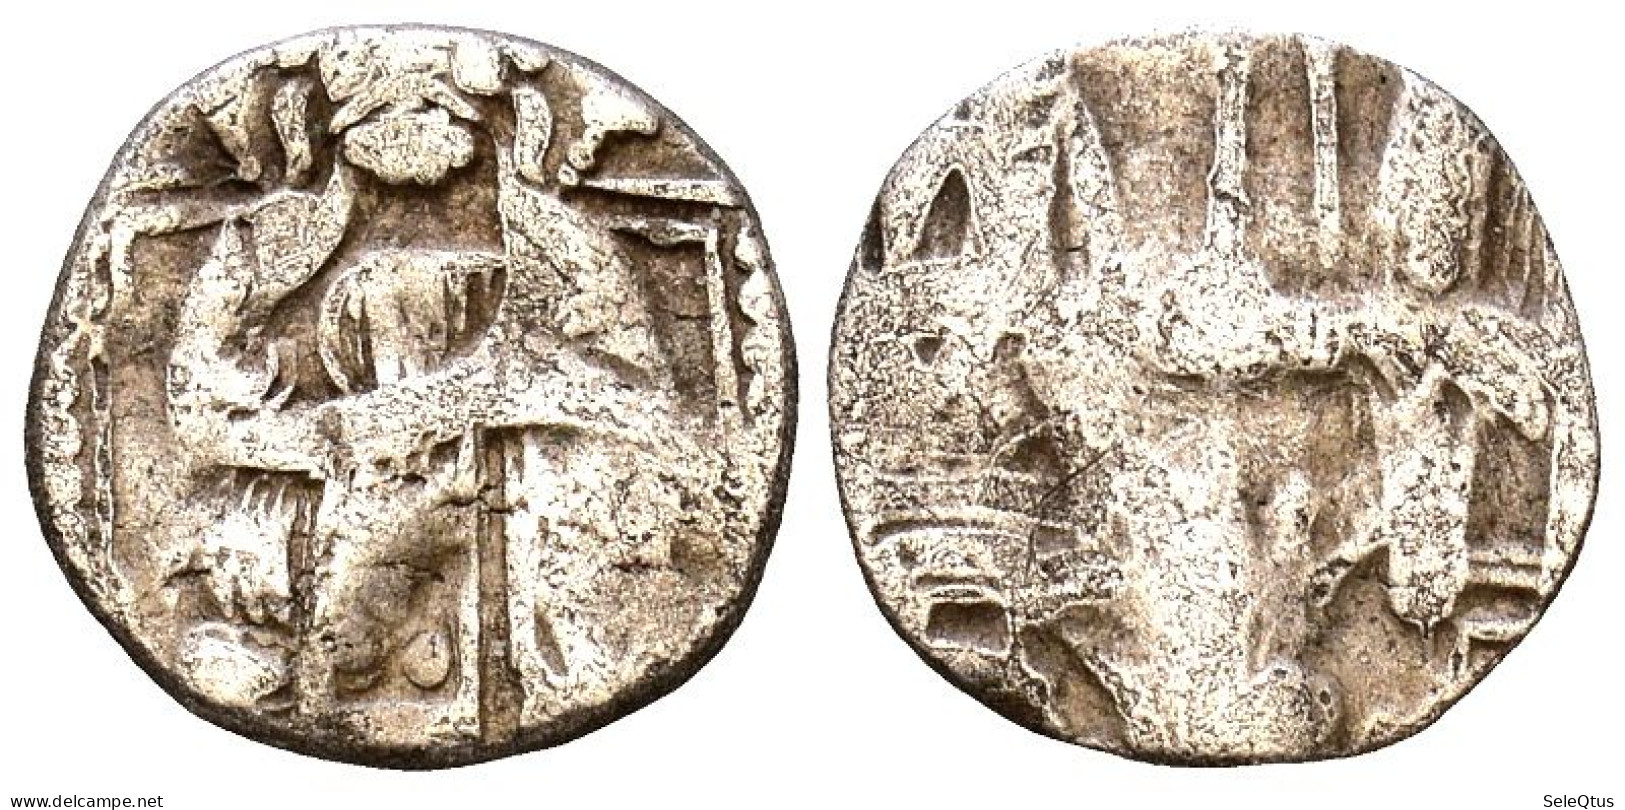 Monedas Antiguas - Ancient Coins (00117-007-1032) - Other - Europe